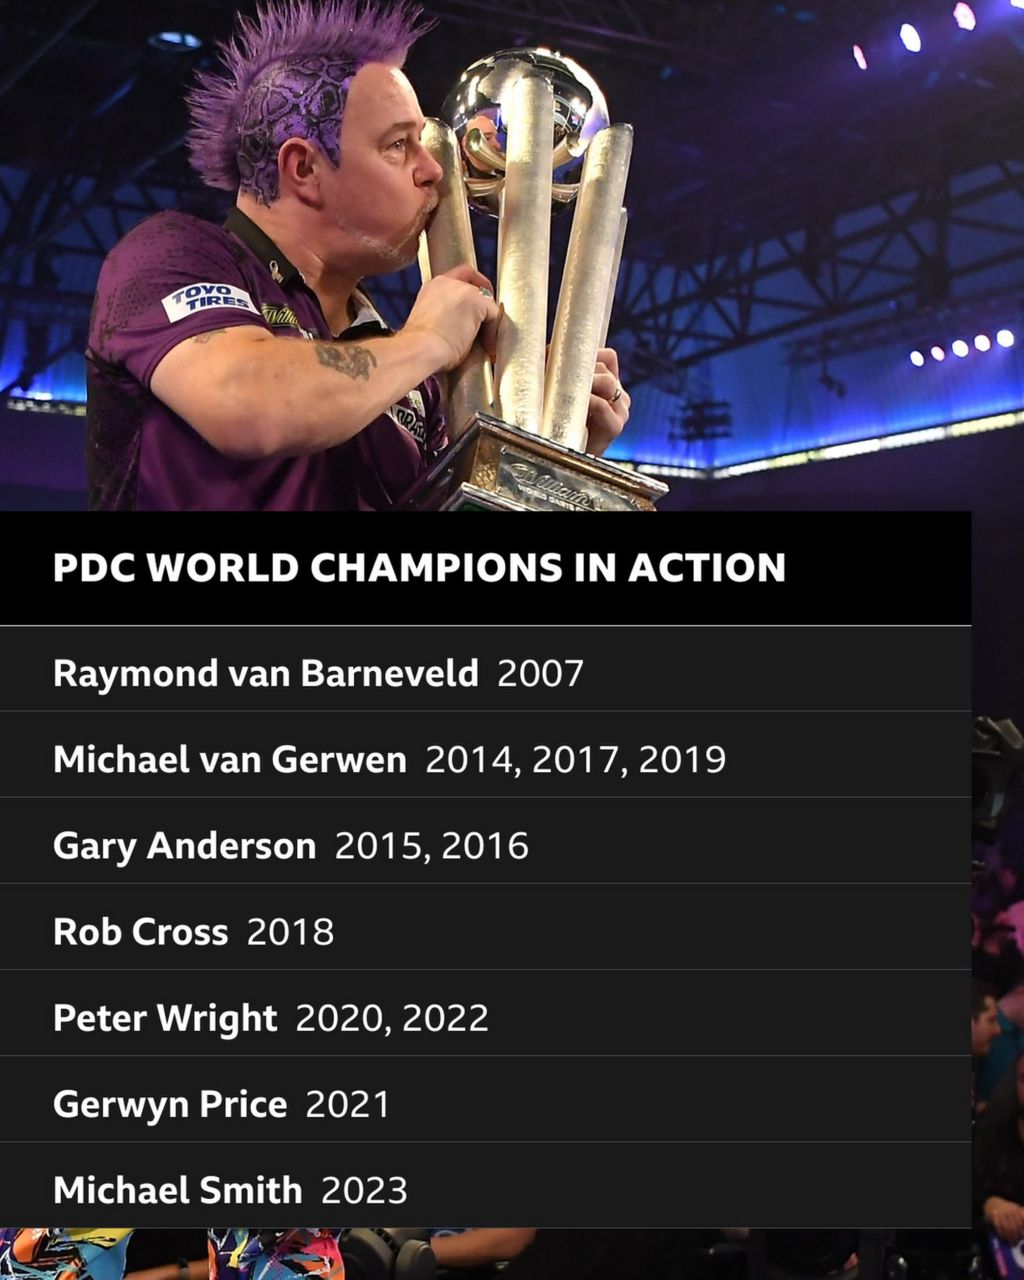 How many PDC World Championship titles has Michael van Gerwen won?